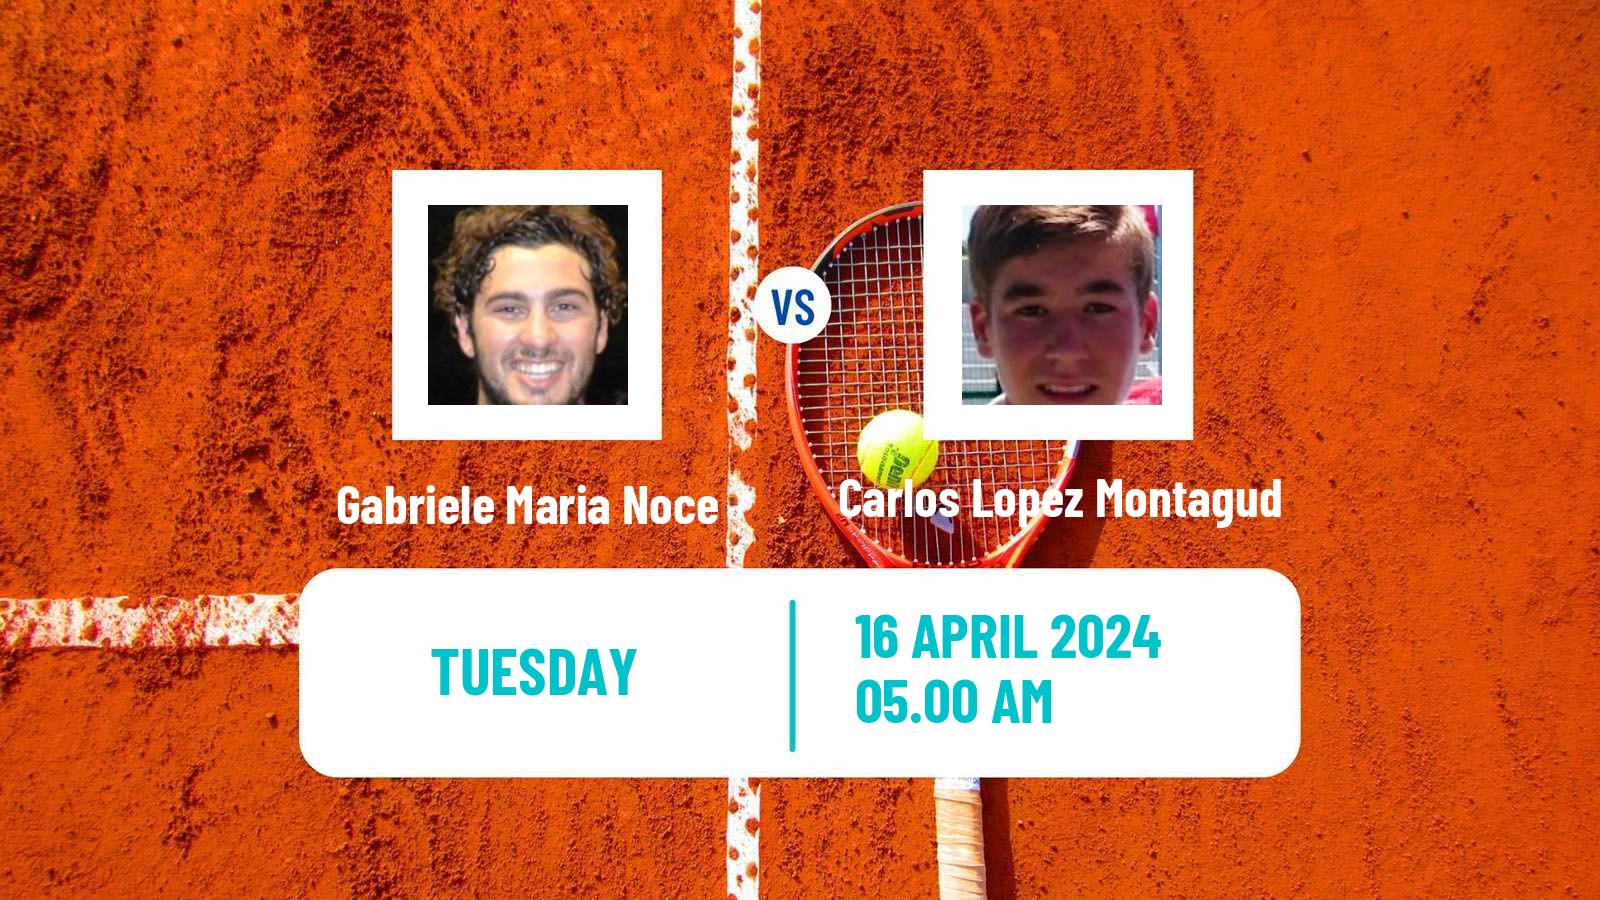 Tennis ITF M25 Santa Margherita Di Pula 4 Men Gabriele Maria Noce - Carlos Lopez Montagud